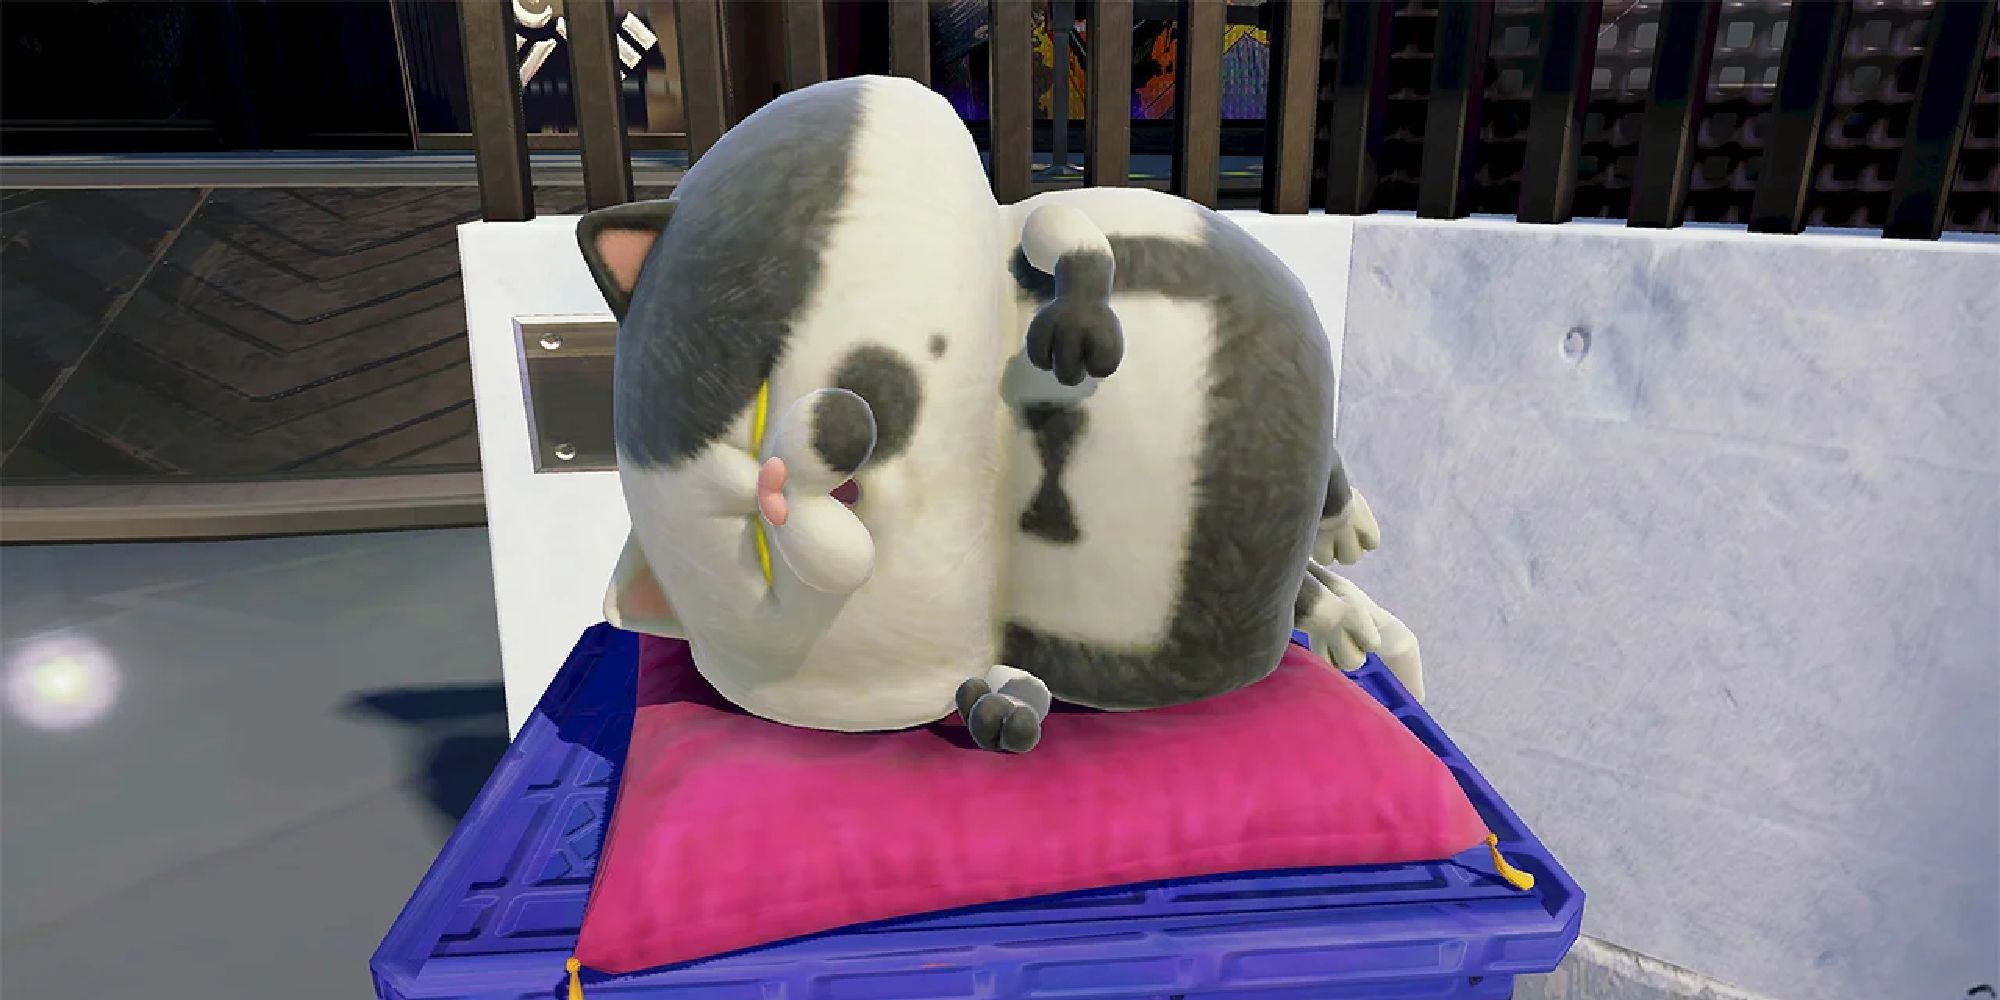 A screenshot of Splatoon, showing Judd the cat taking a nap on a velvet cushion